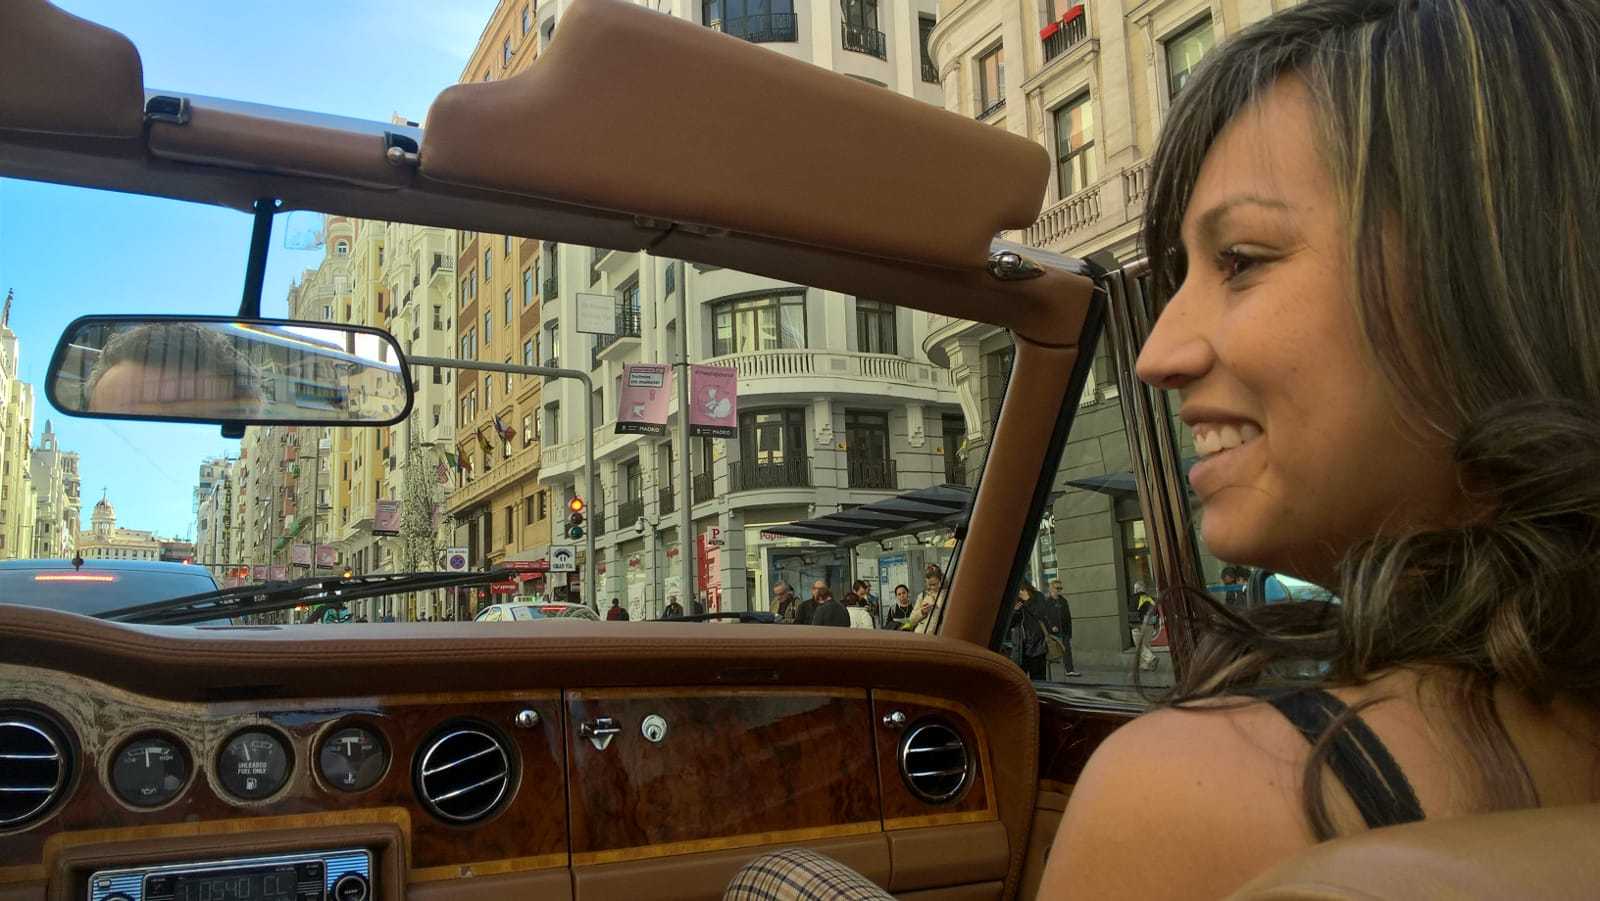 Drive Through Madrid in a Classic Car